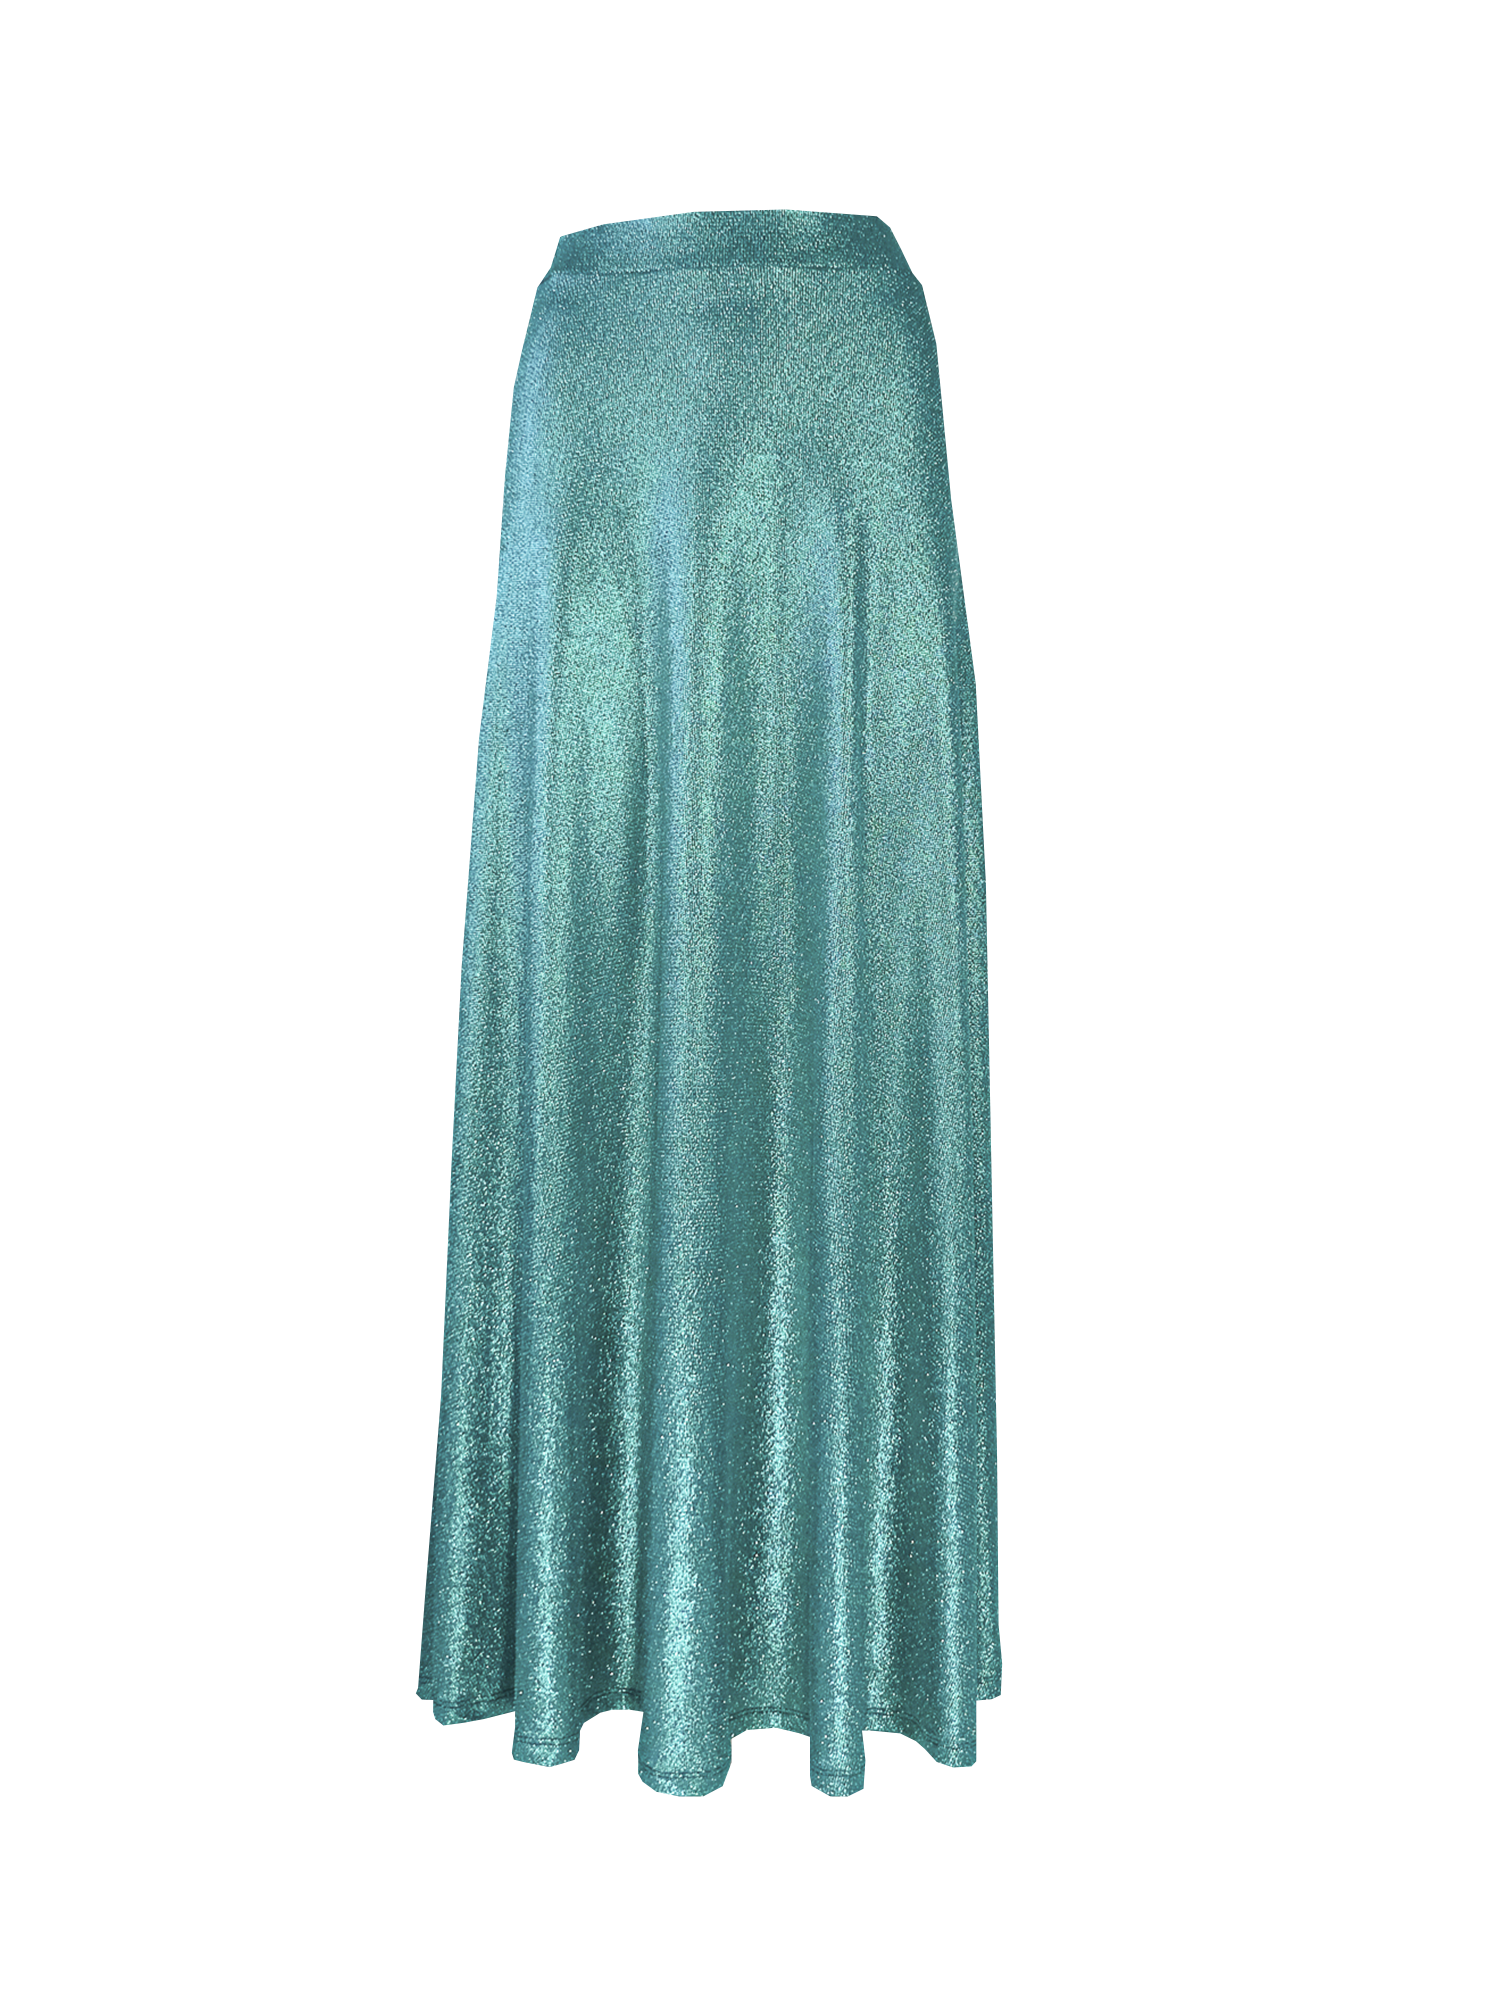 TOSCA - long skirt in green lurex